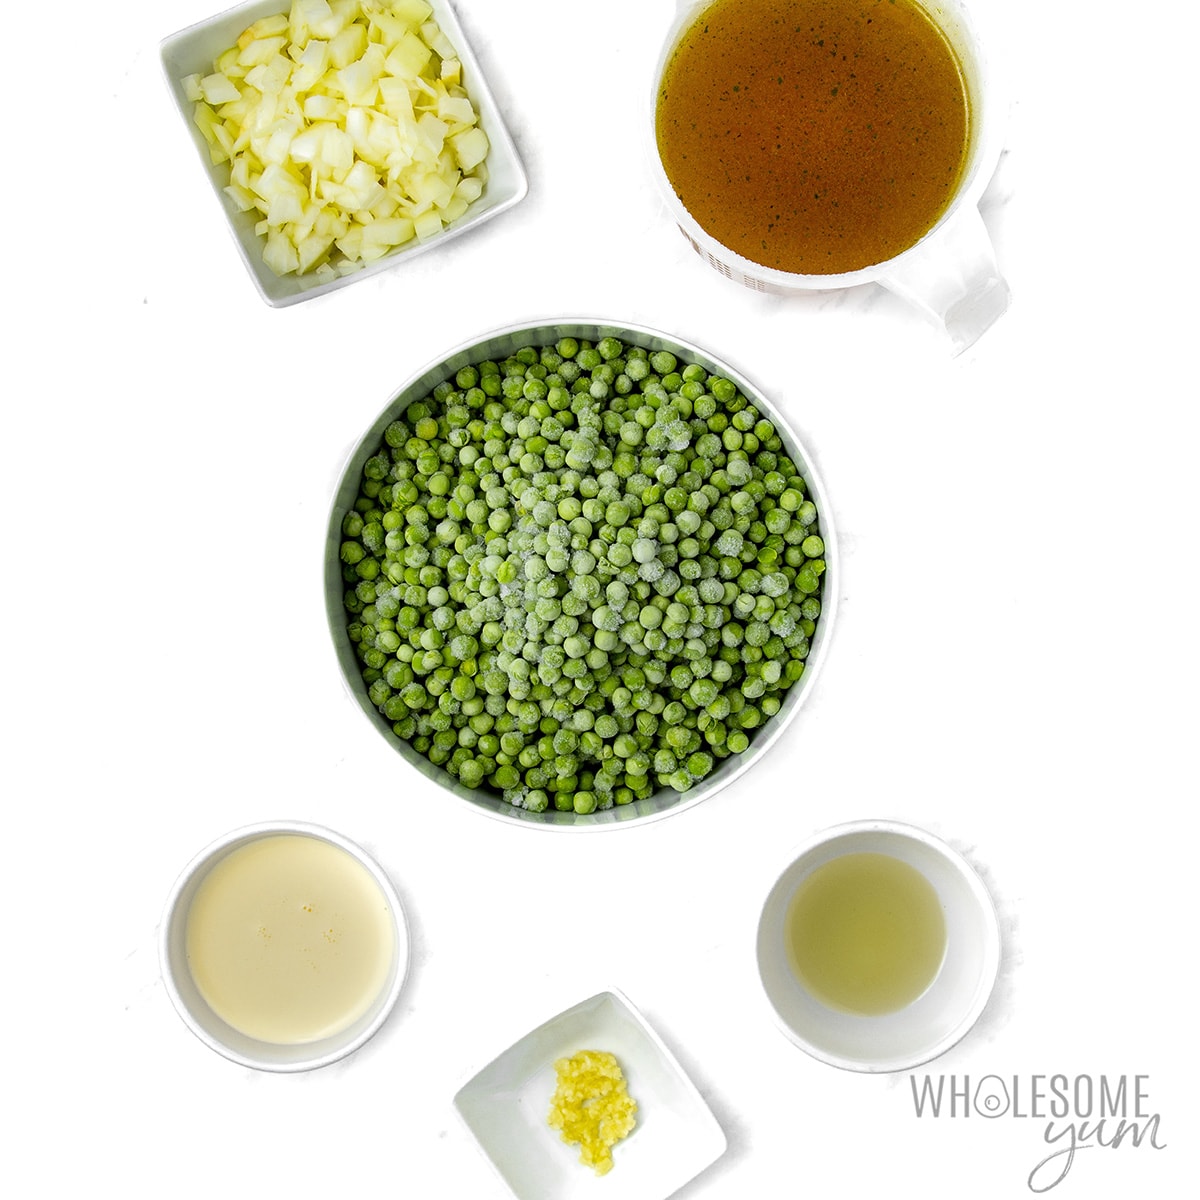 Pea soup ingredients.